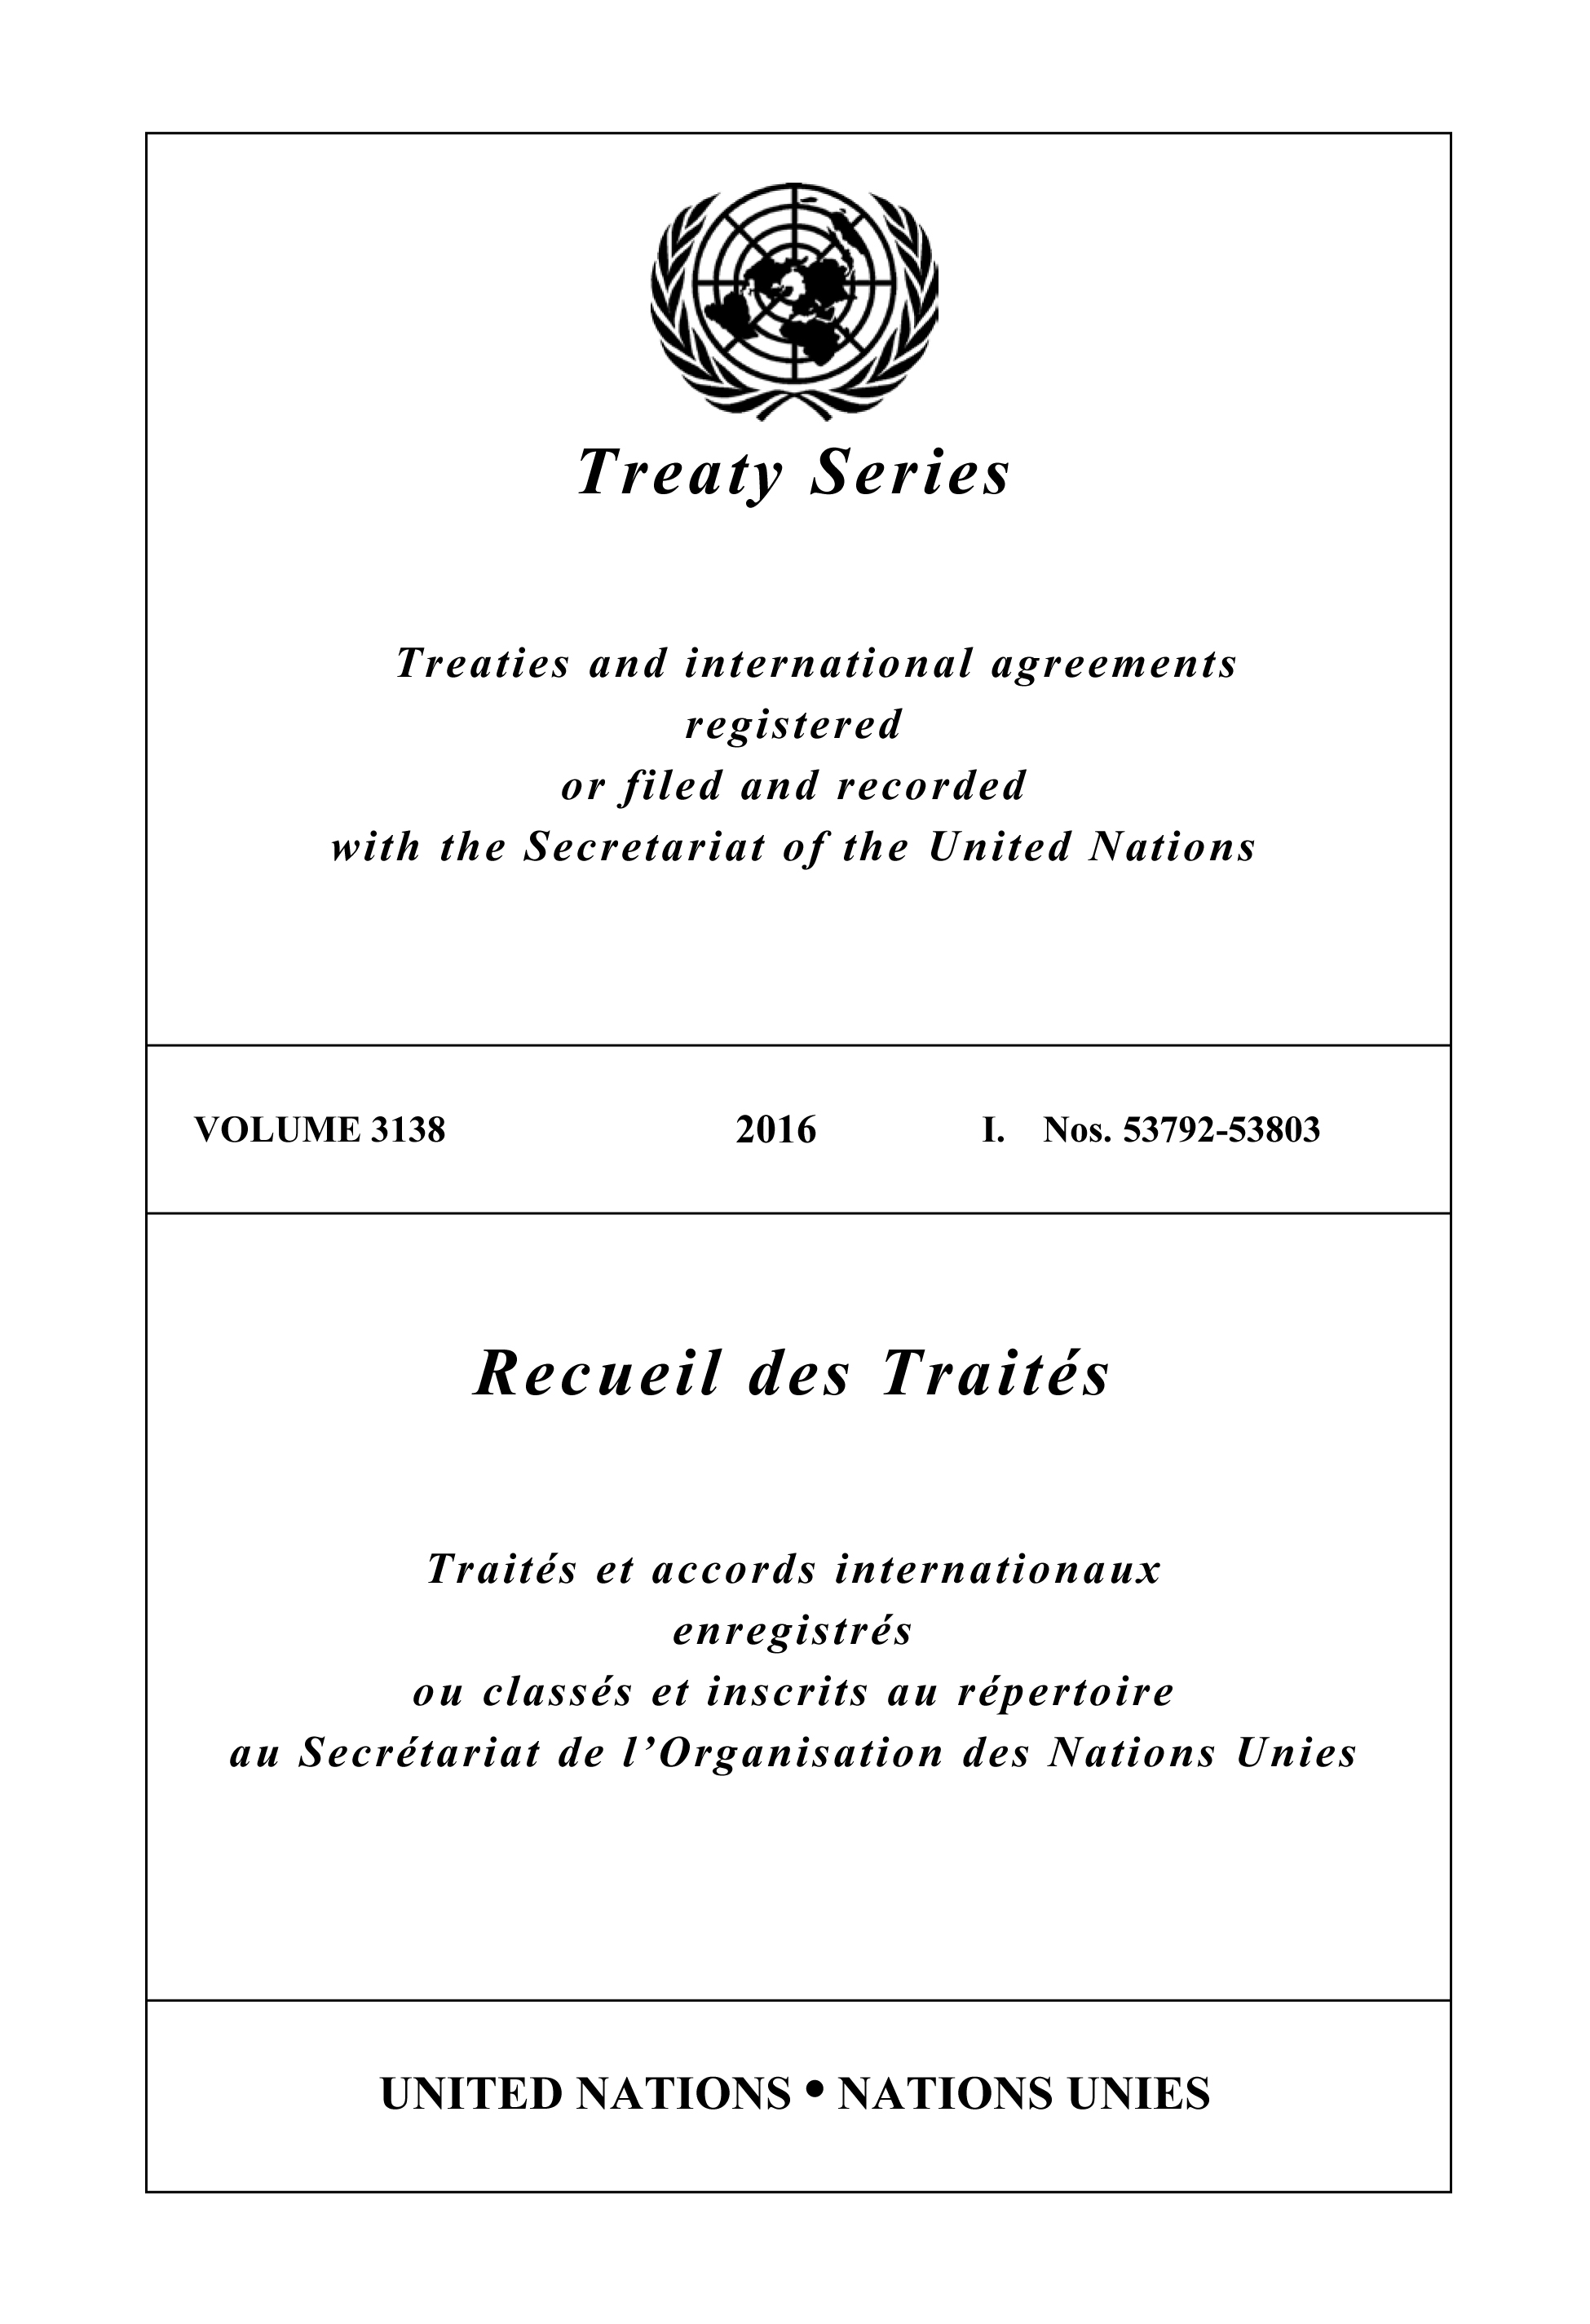 image of Treaty Series 3138